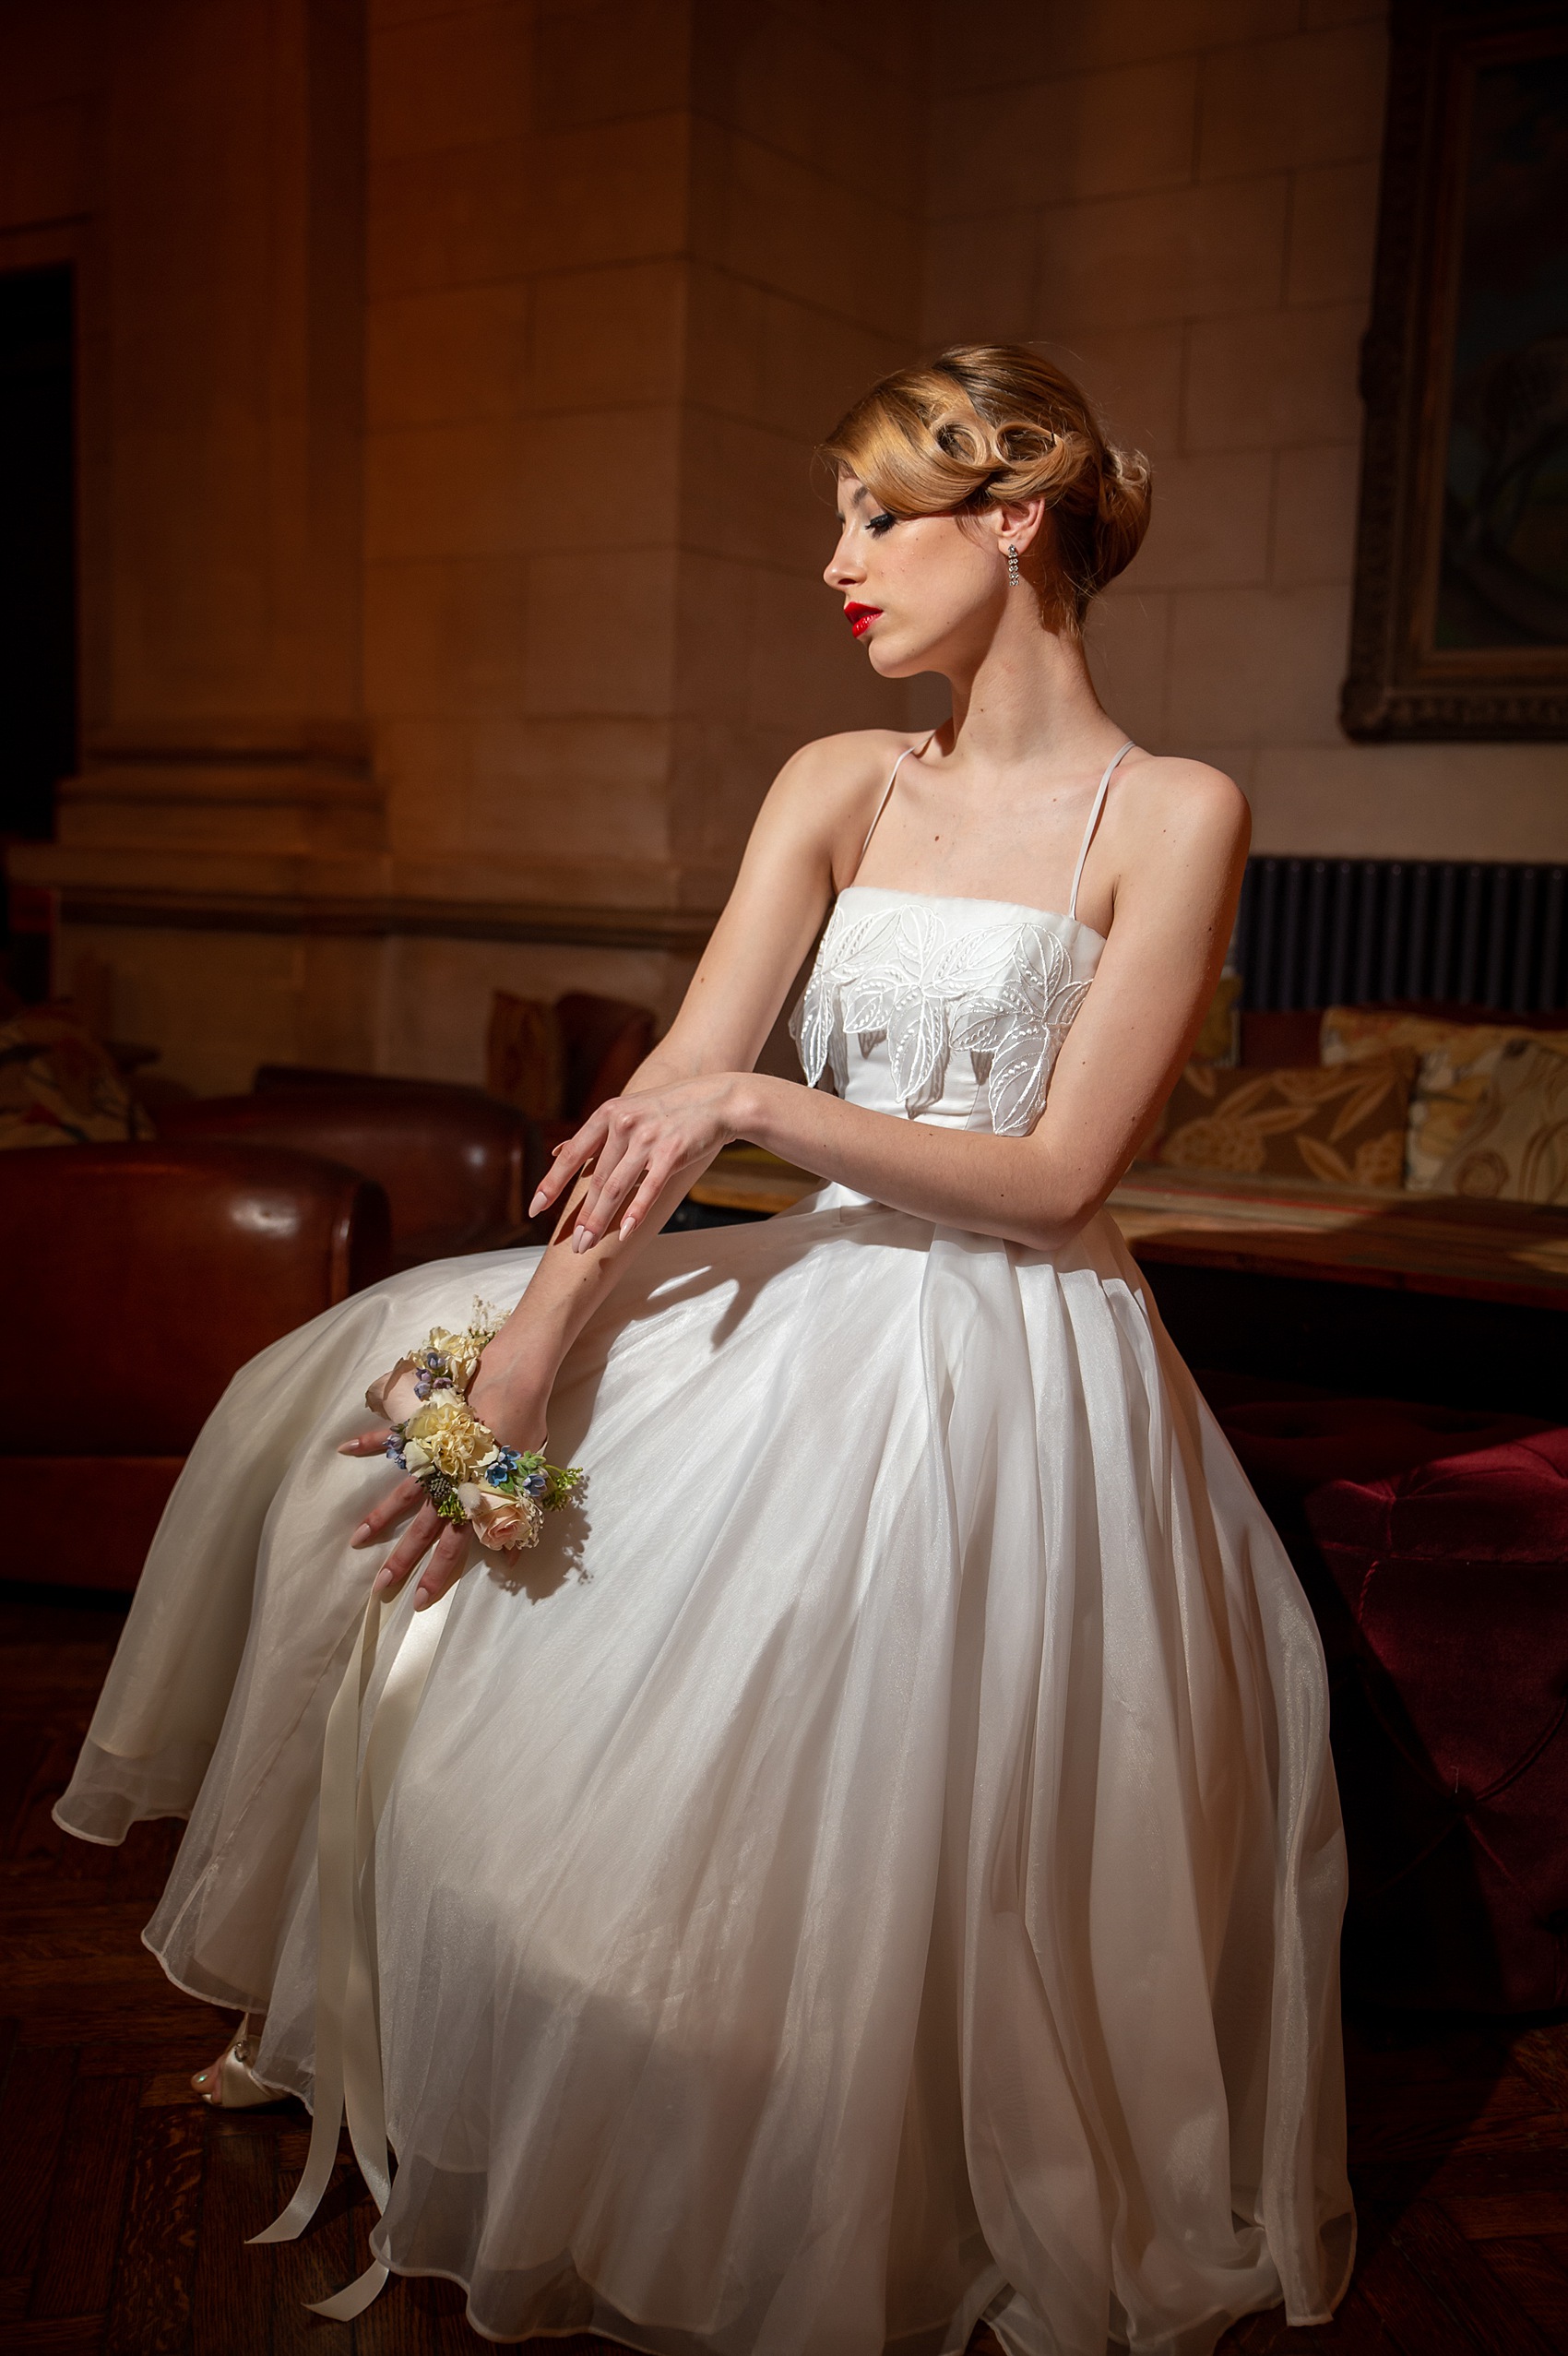 Real Bride&Wedding: Dior wedding dress